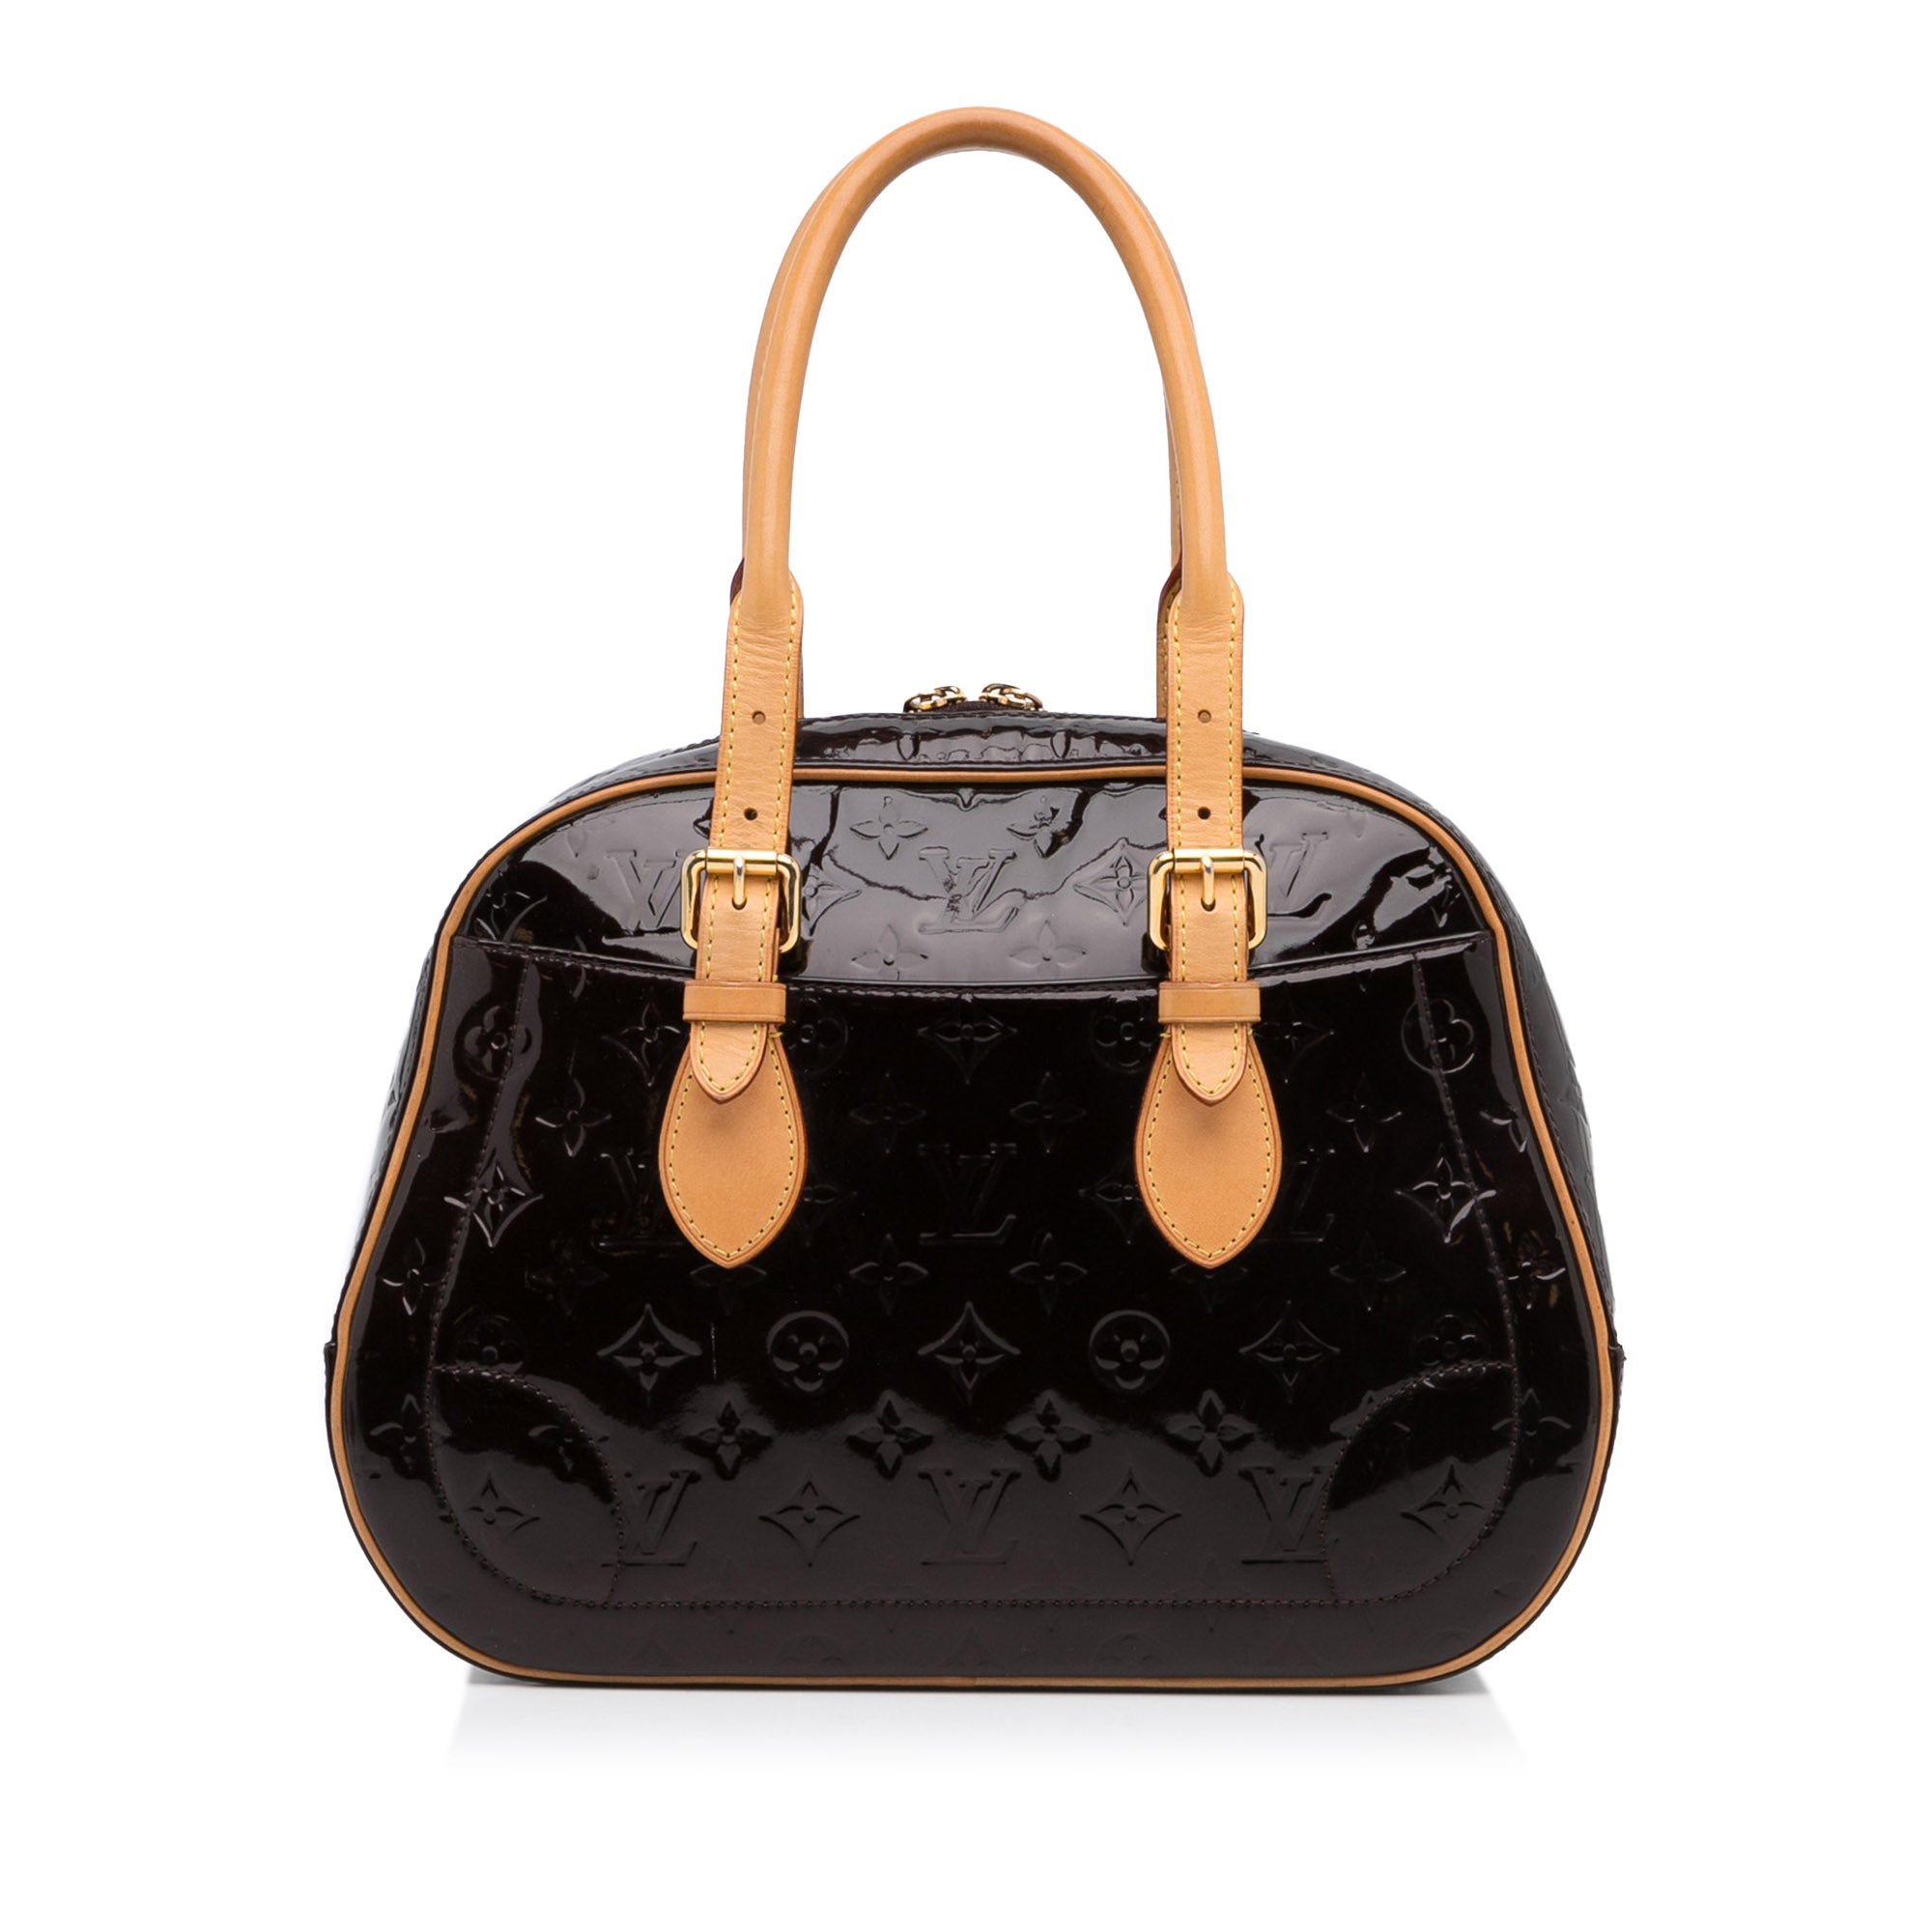 Louis Vuitton - Authenticated Sobe Clutch Bag - Leather Purple Plain for Women, Good Condition